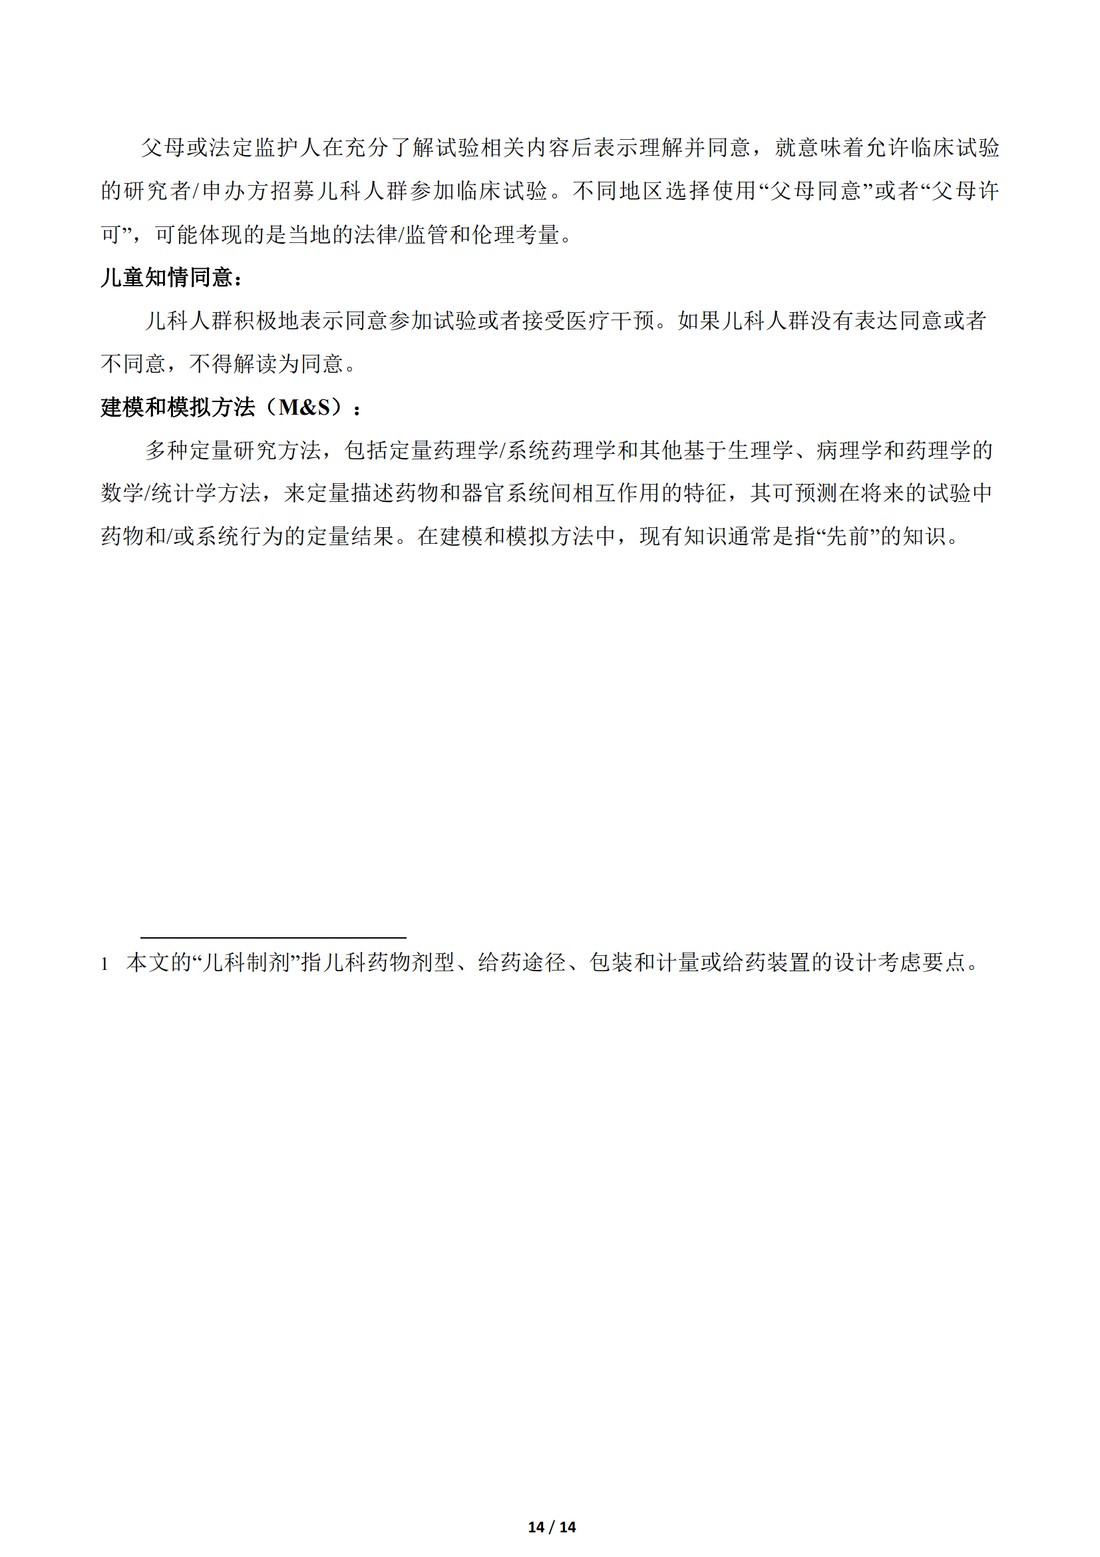 E11补充文件（R1）：用于儿科人群的医学产品的临床研究（中文翻译公开征求意见稿）_14.jpg